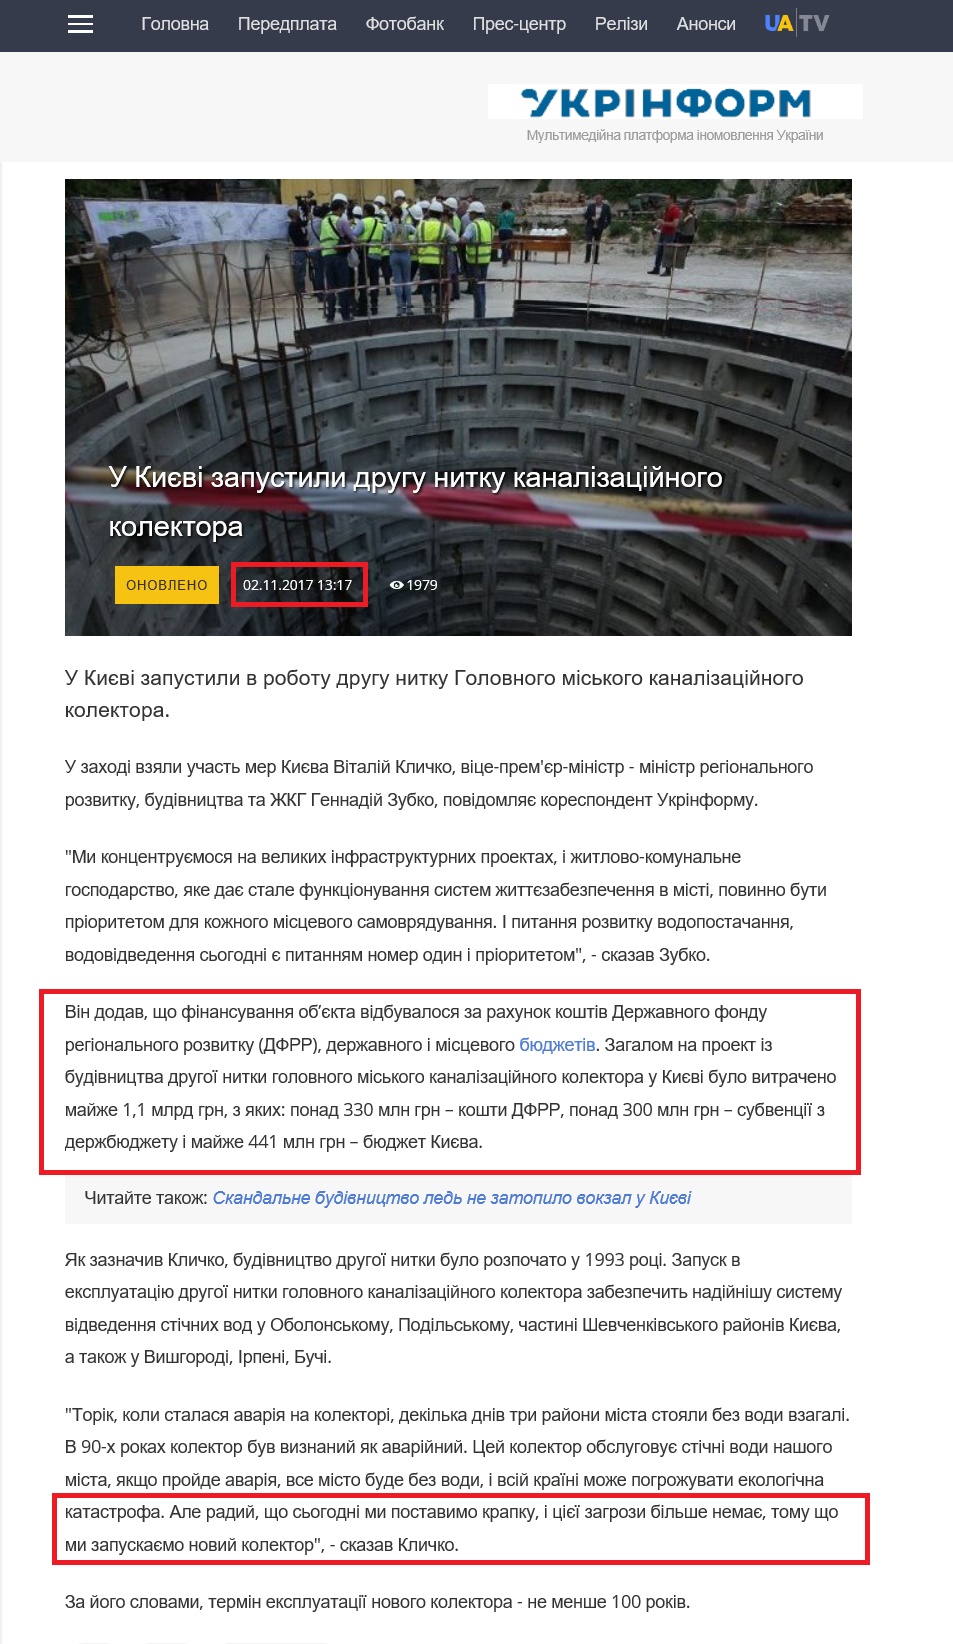 https://www.ukrinform.ua/rubric-kyiv/2336342-u-kievi-zapustili-drugu-nitku-kanalizacijnogo-kolektora.html